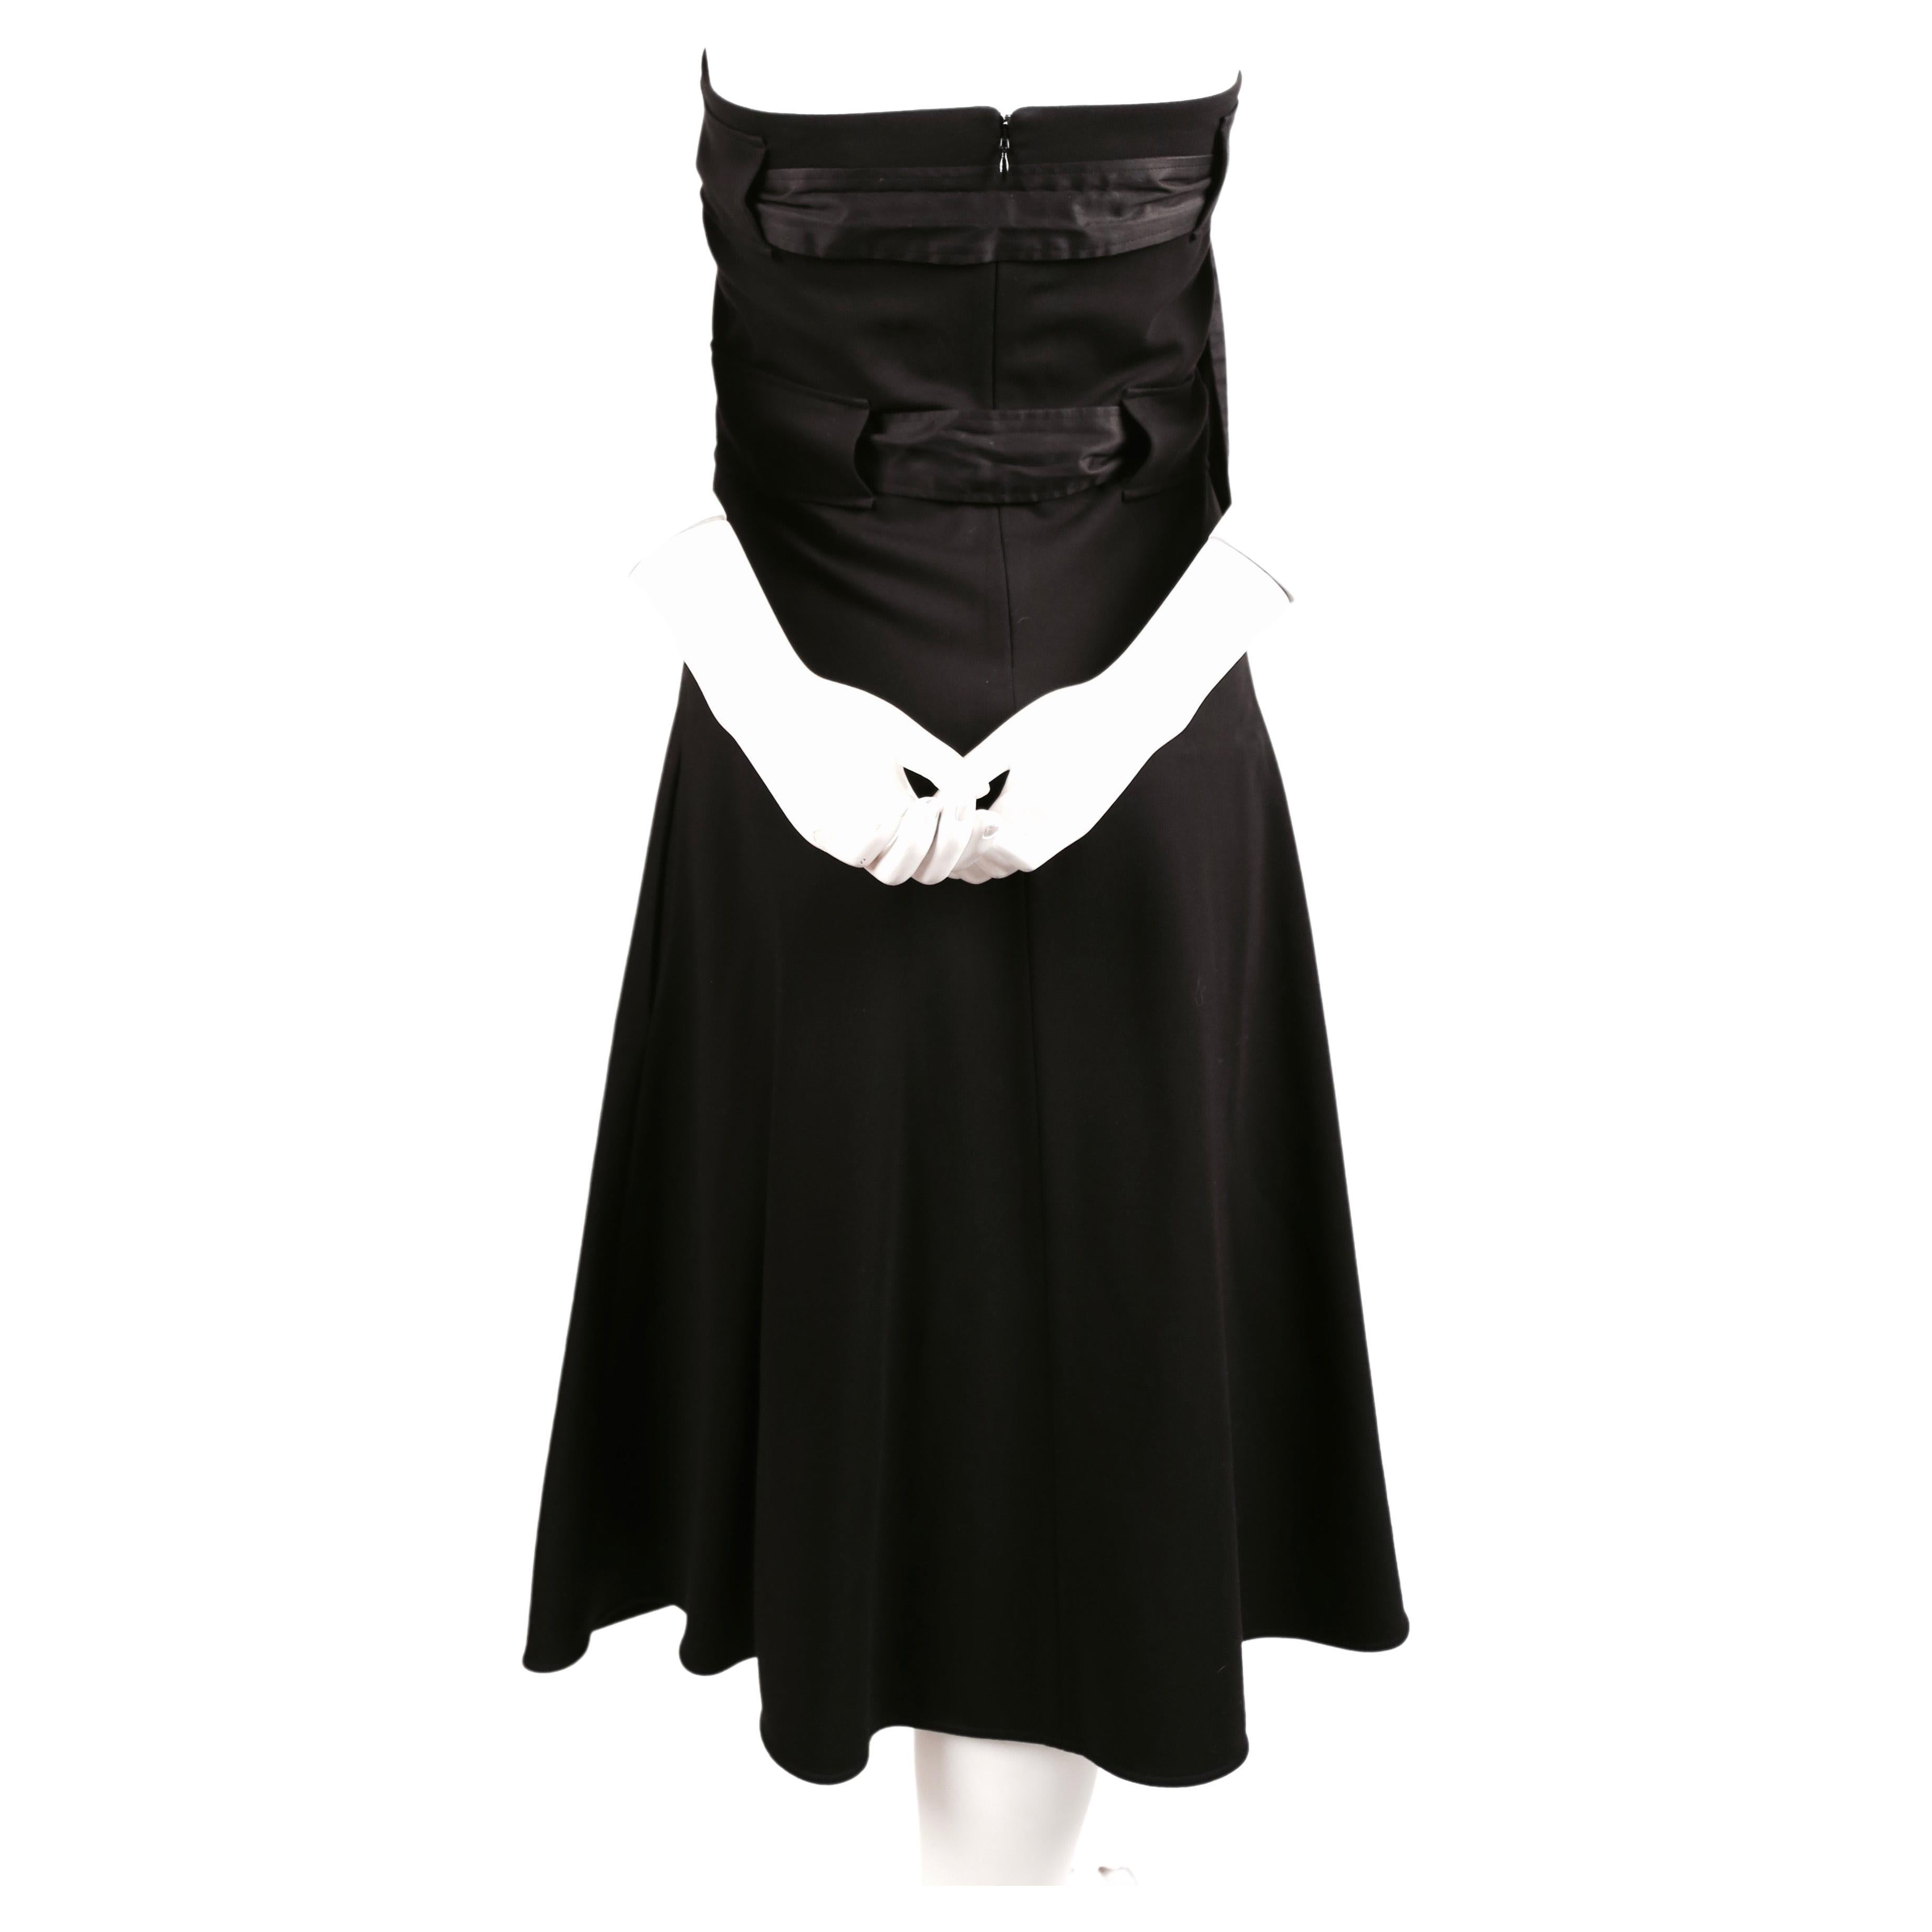 Women's 2014 CELINE BY PHOEBE PHILO black strapless dress with belts